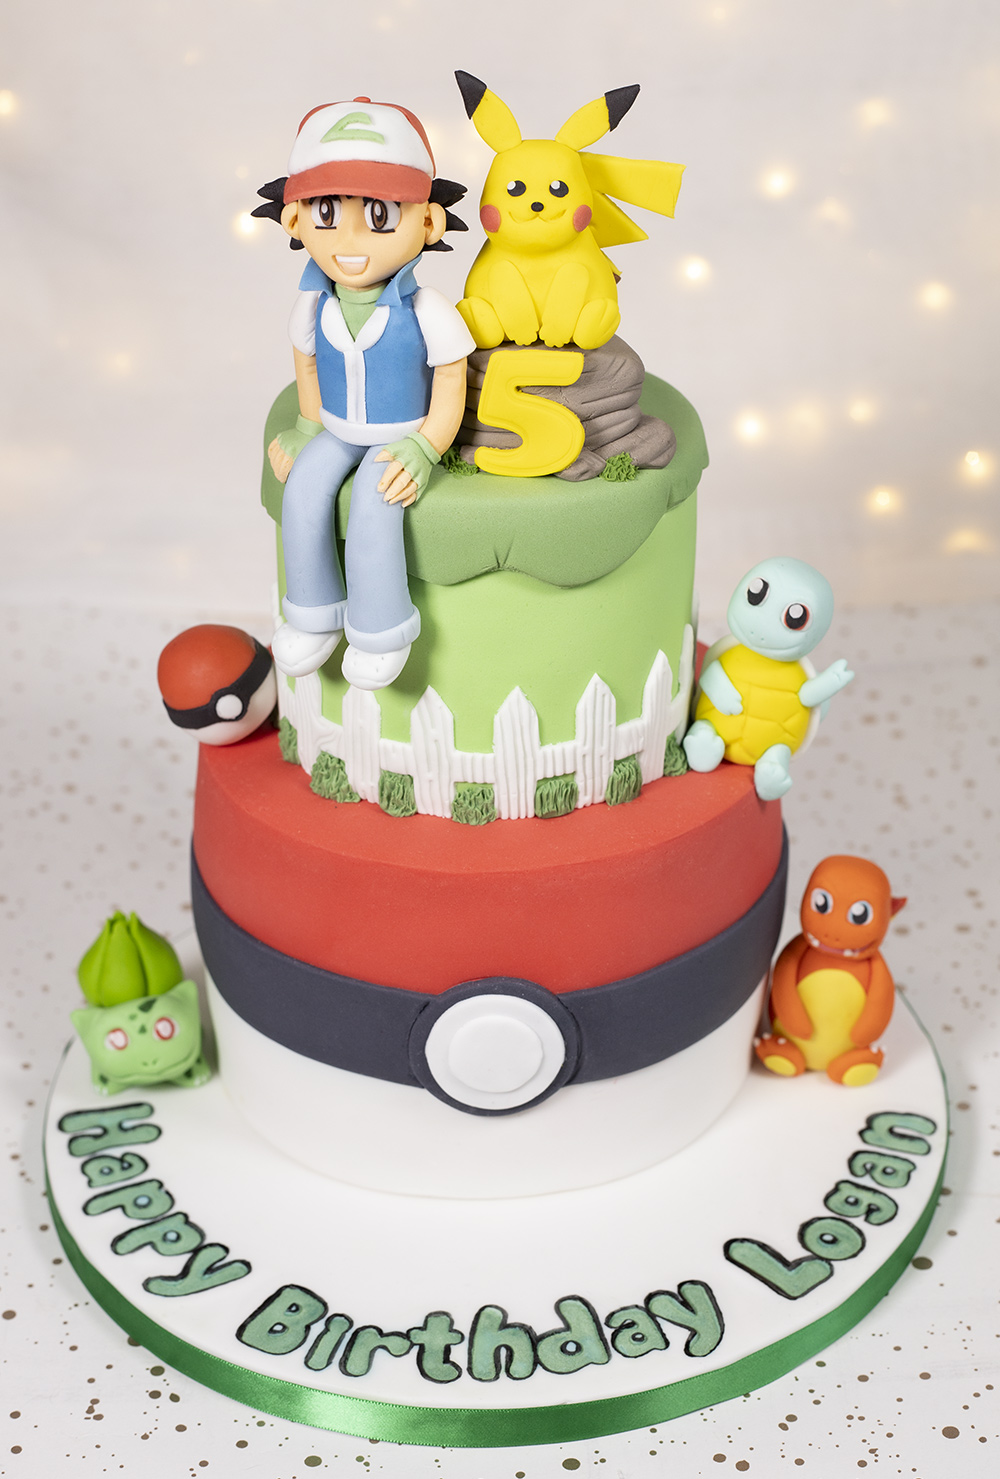 Order your pokémon birthday cake, pikachu online